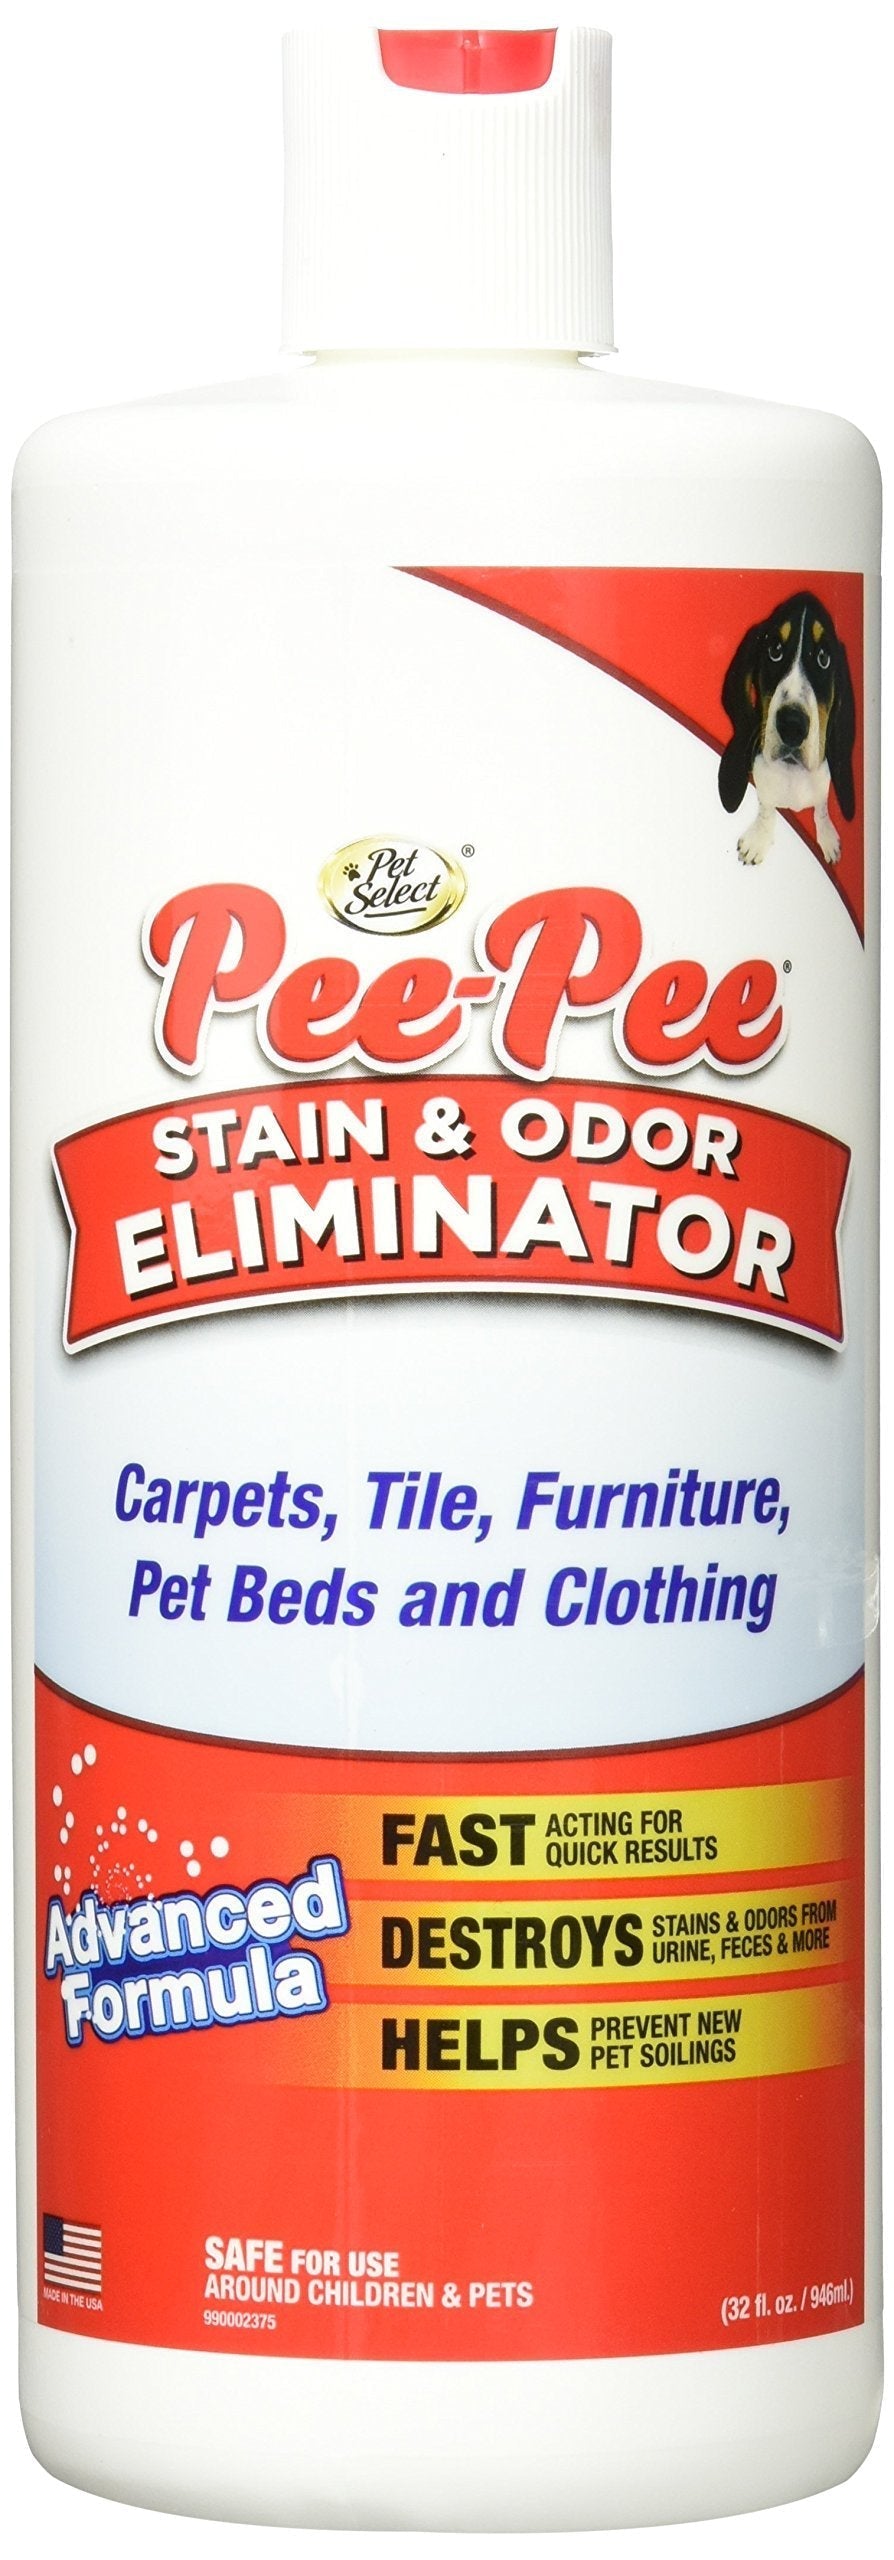 [Australia] - Pee-Pee ELCO Laboratories Stain & Odor Remover, 32 oz 